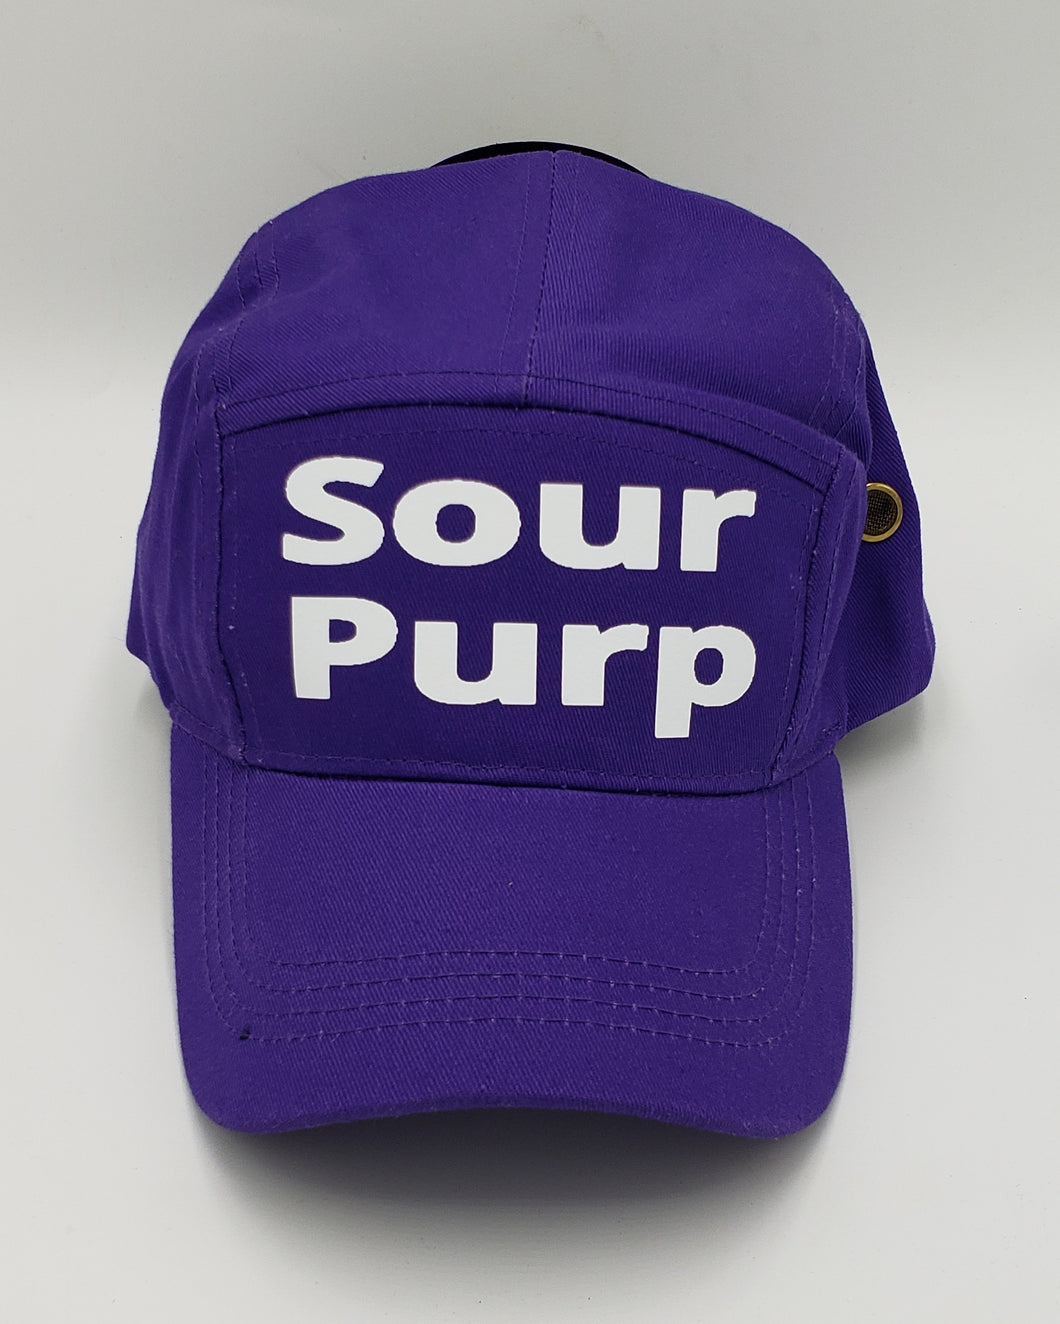 Sour Purp  custom hat